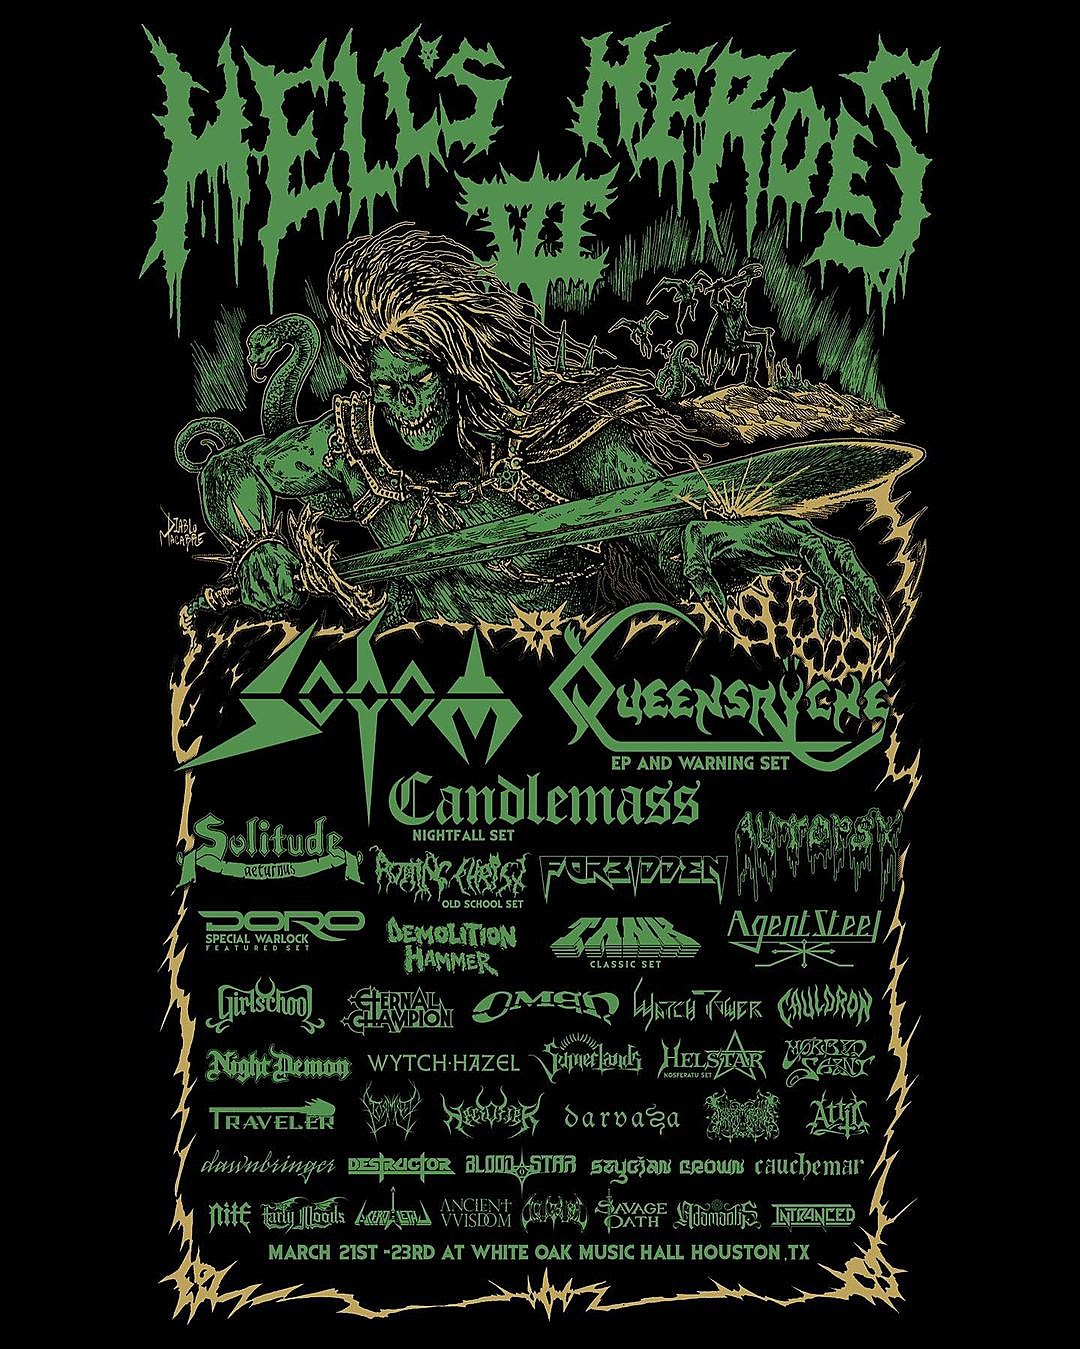 Morbid Saint playing shows, including Saint Vitus (dates)